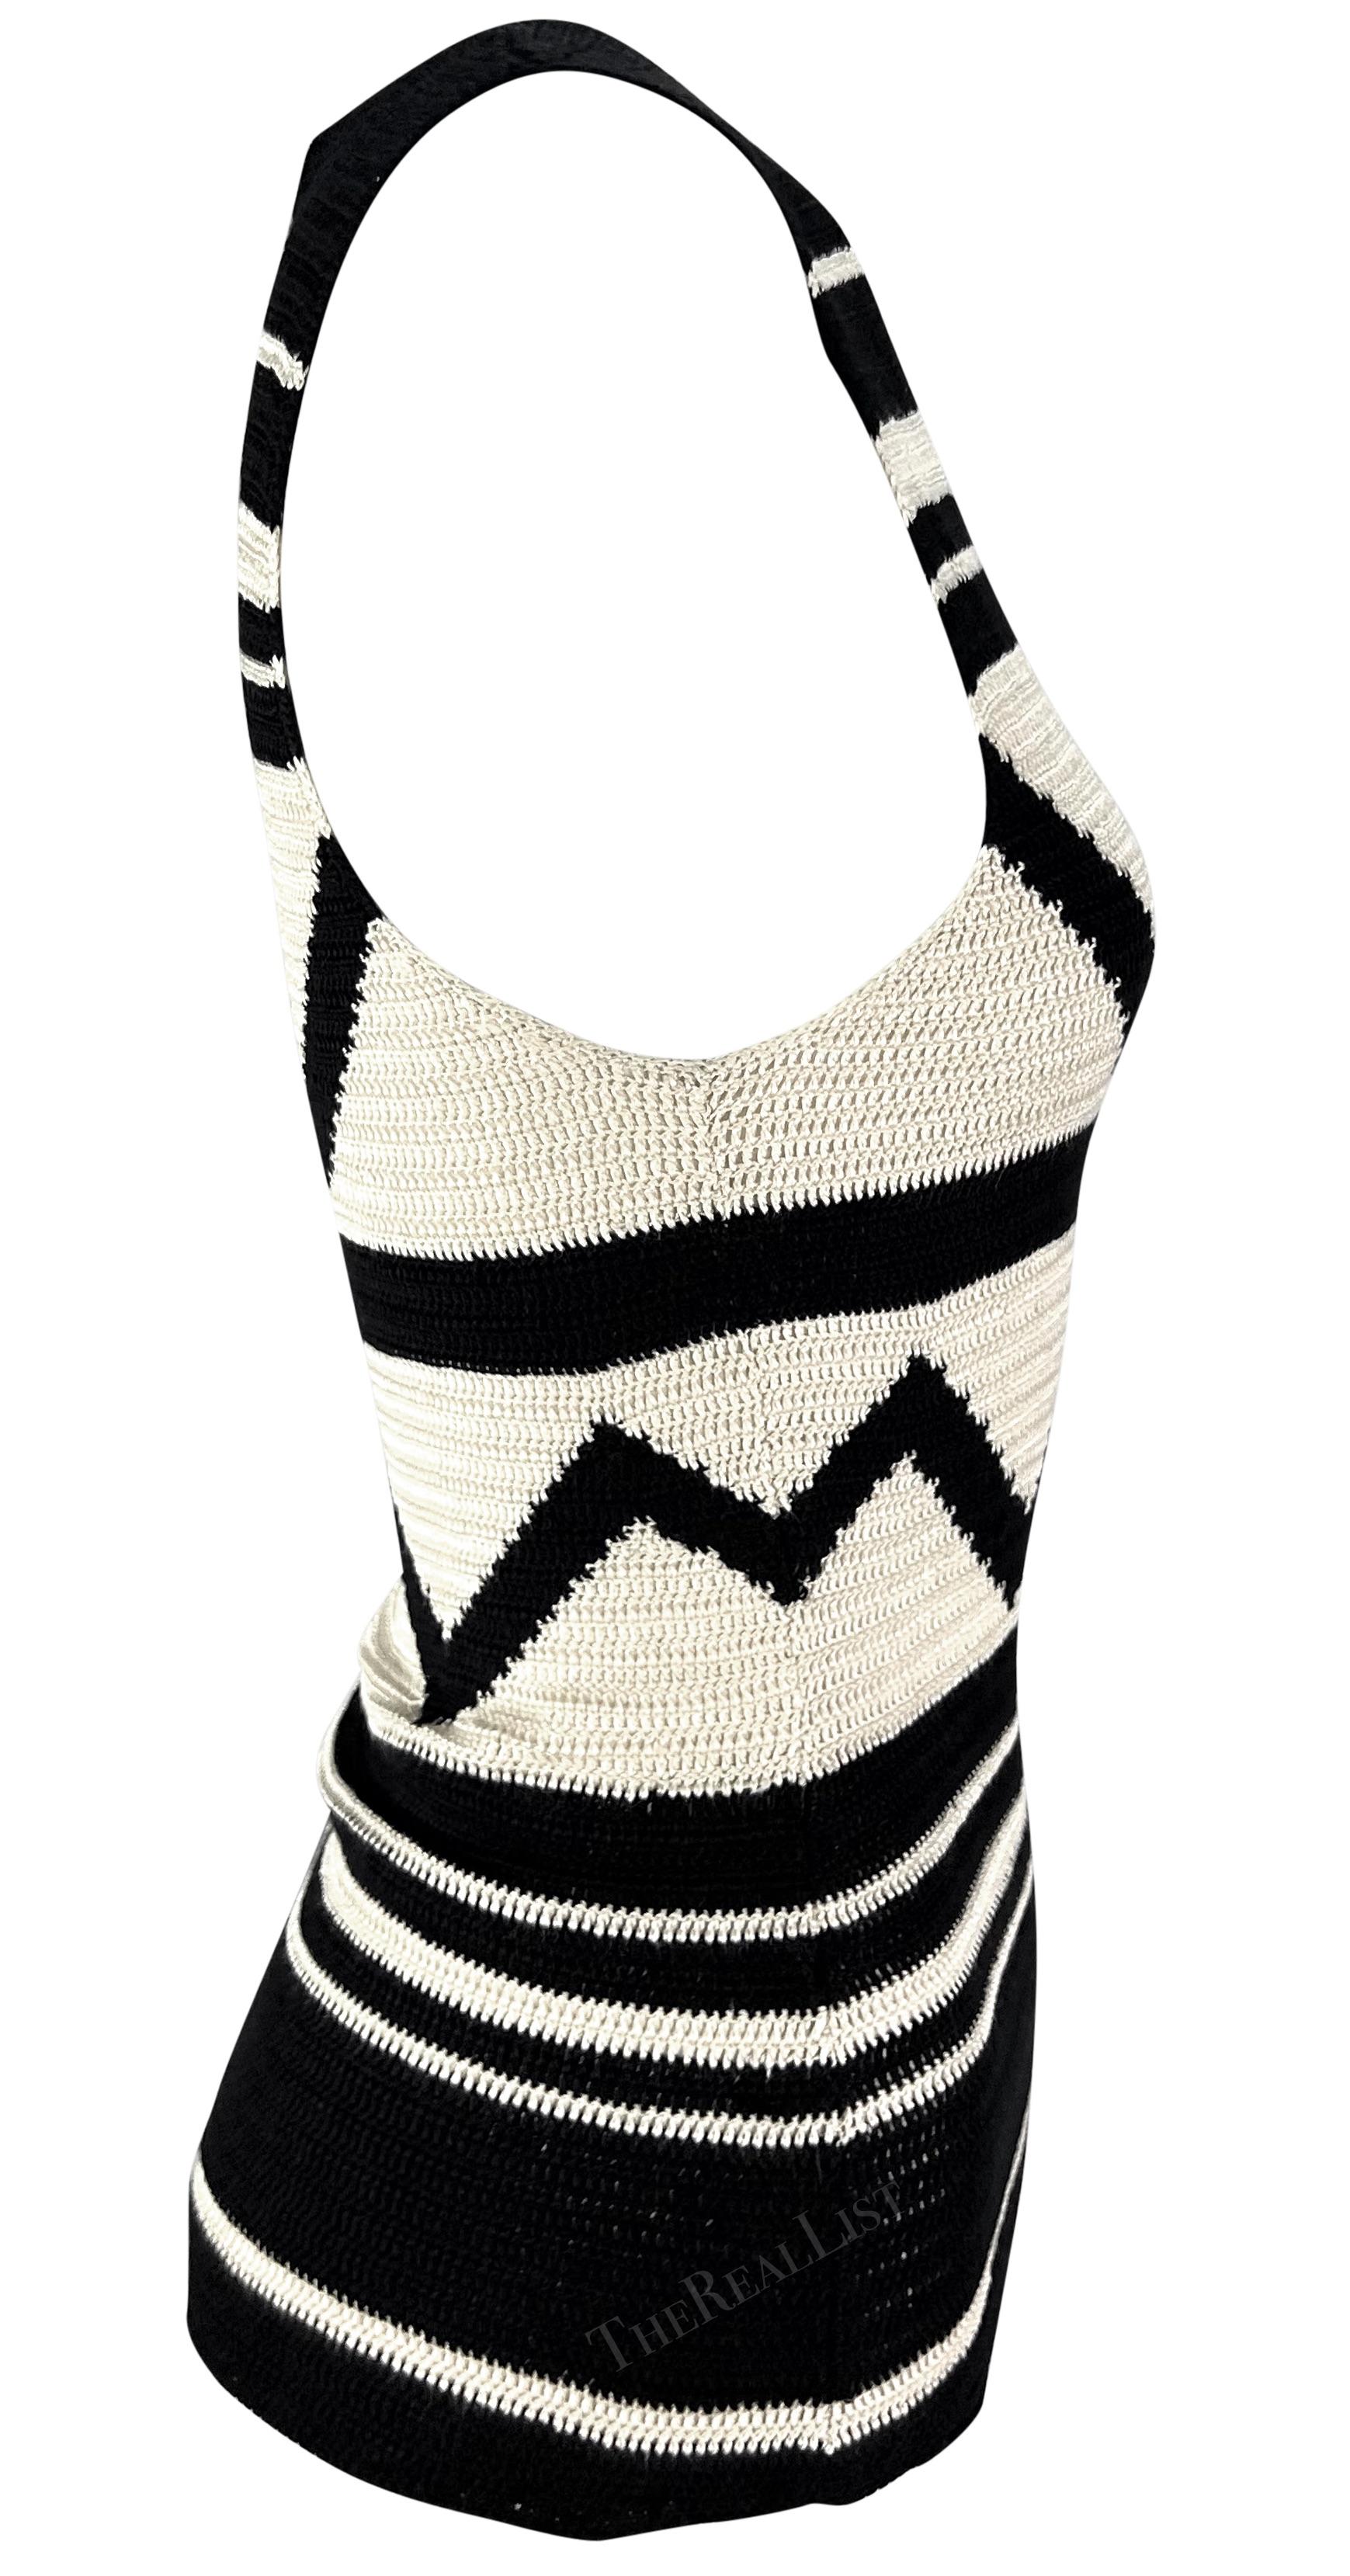 S/S 2001 Ralph Lauren Runway Creme Black Geometric Sheer Knit Silk Sweater Top For Sale 4